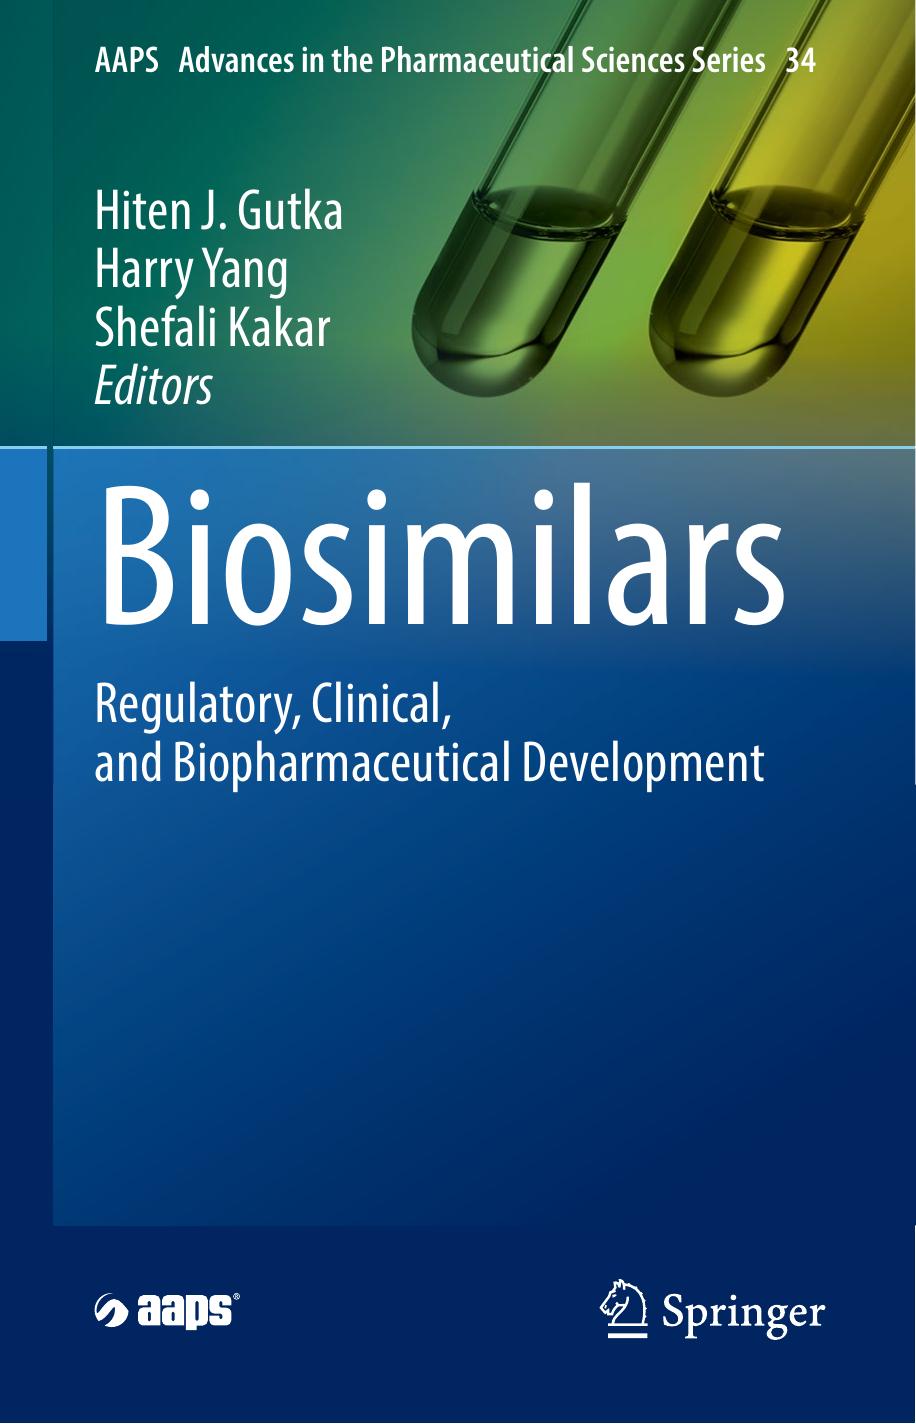 Biosimilars Regulatory, Clinical, and Biopharmaceutical Development 2018